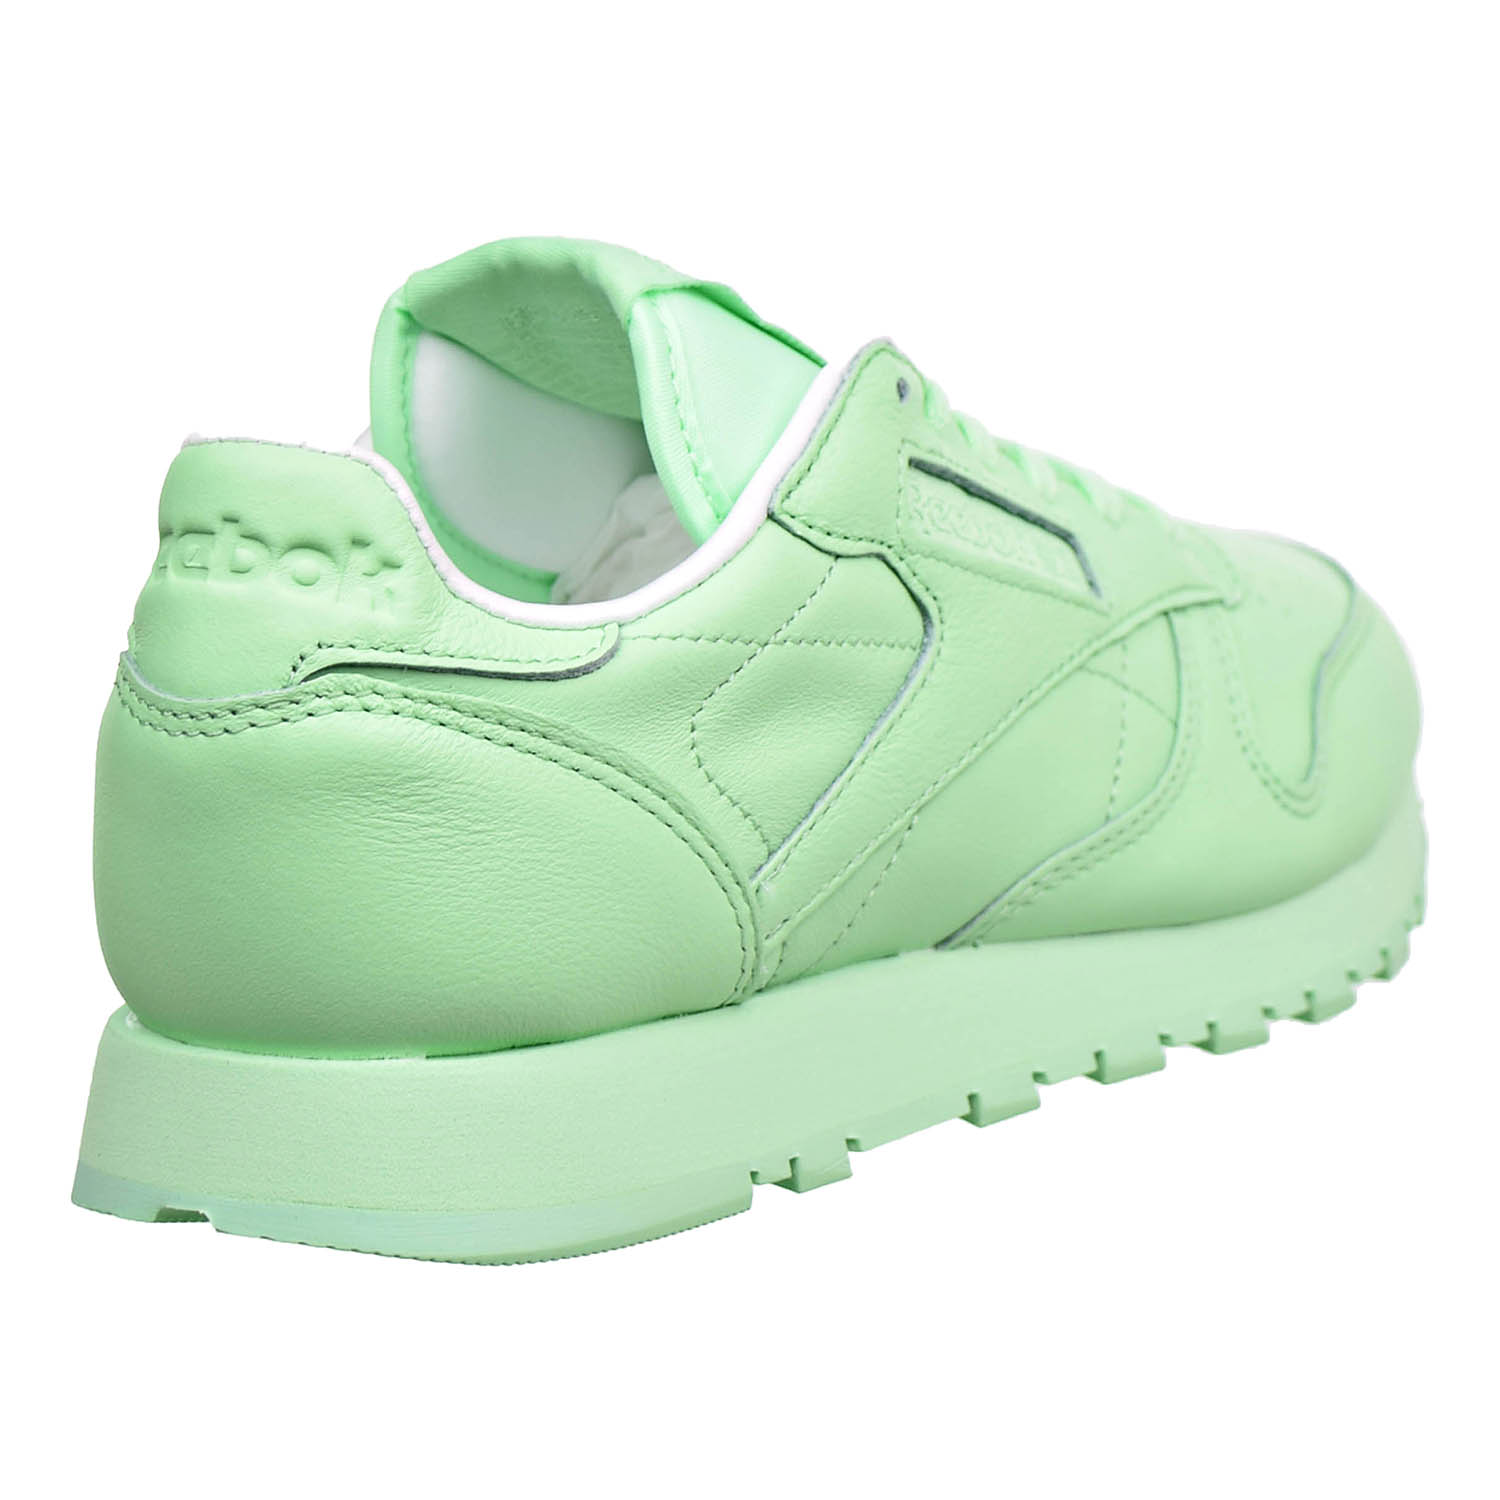 Reebok Classic Leather Pastels Womens Shoes Mint Green-White bd2773 | eBay